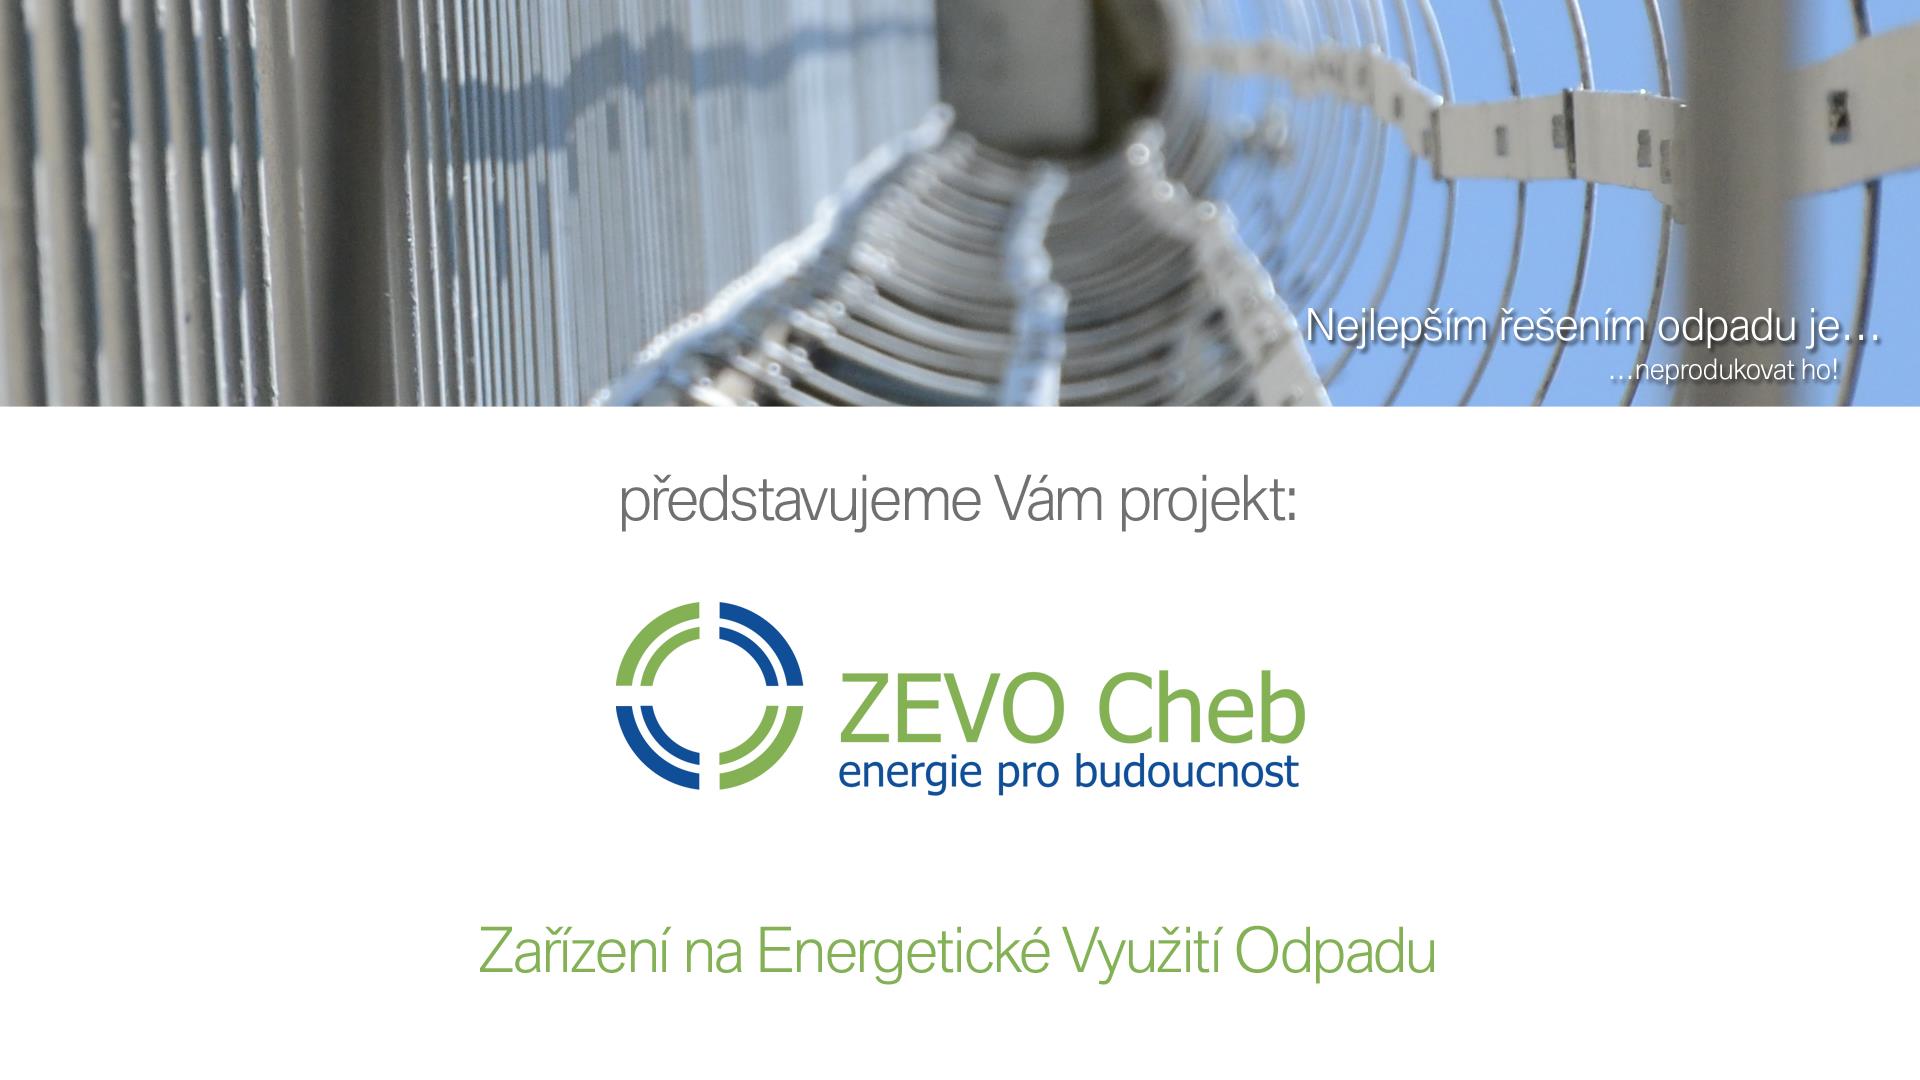 ZEVO Cheb